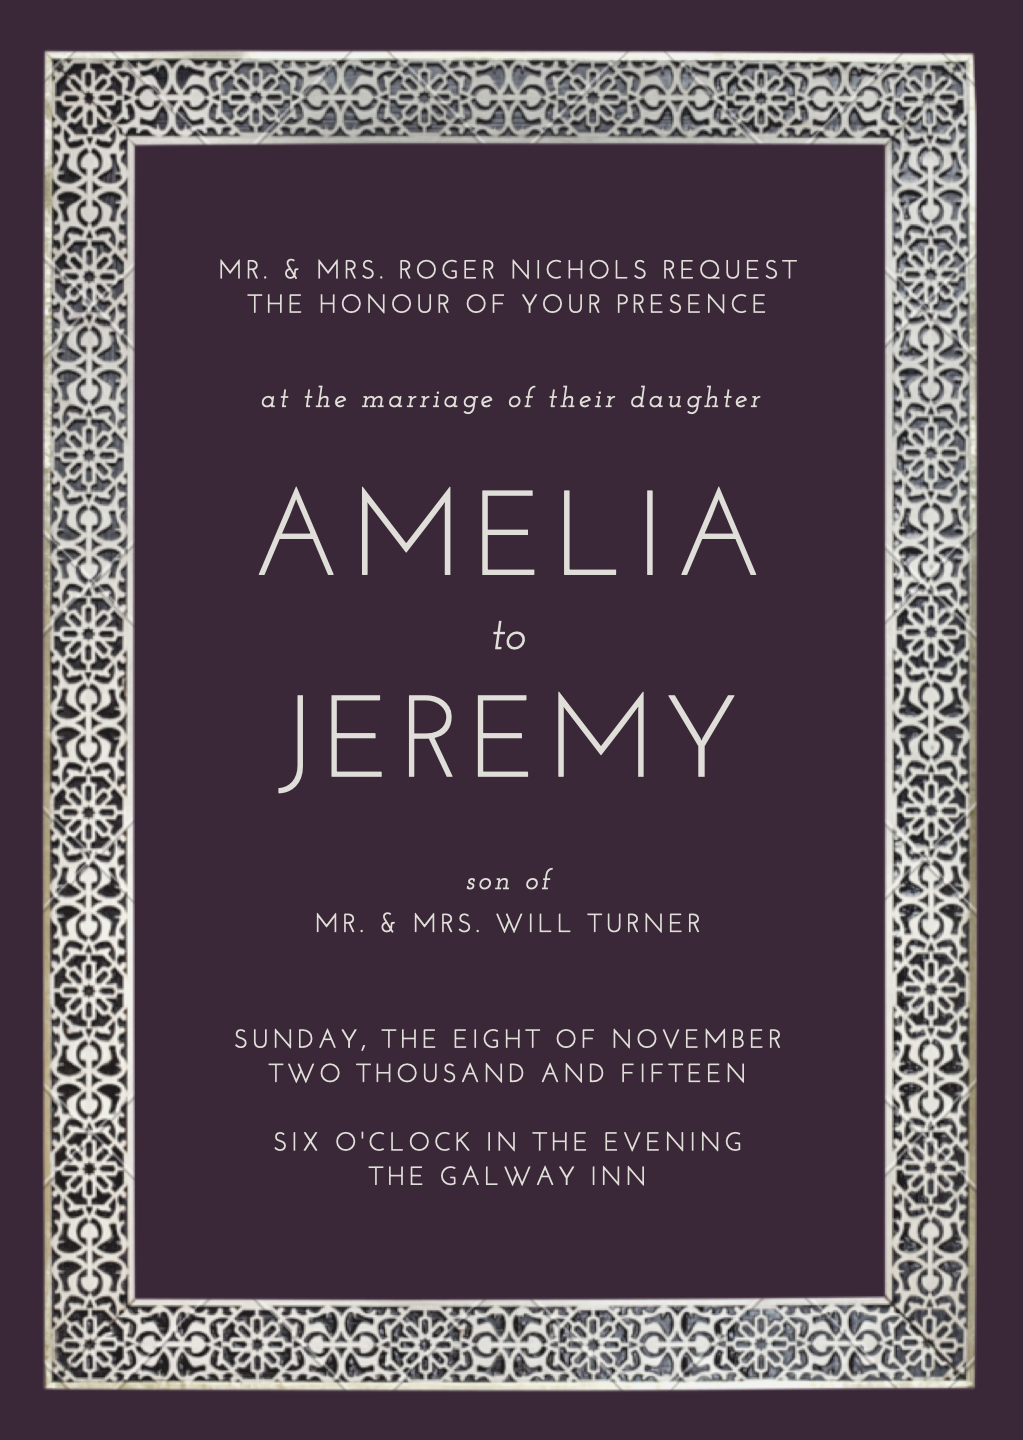 Purple wedding invitation with classy design